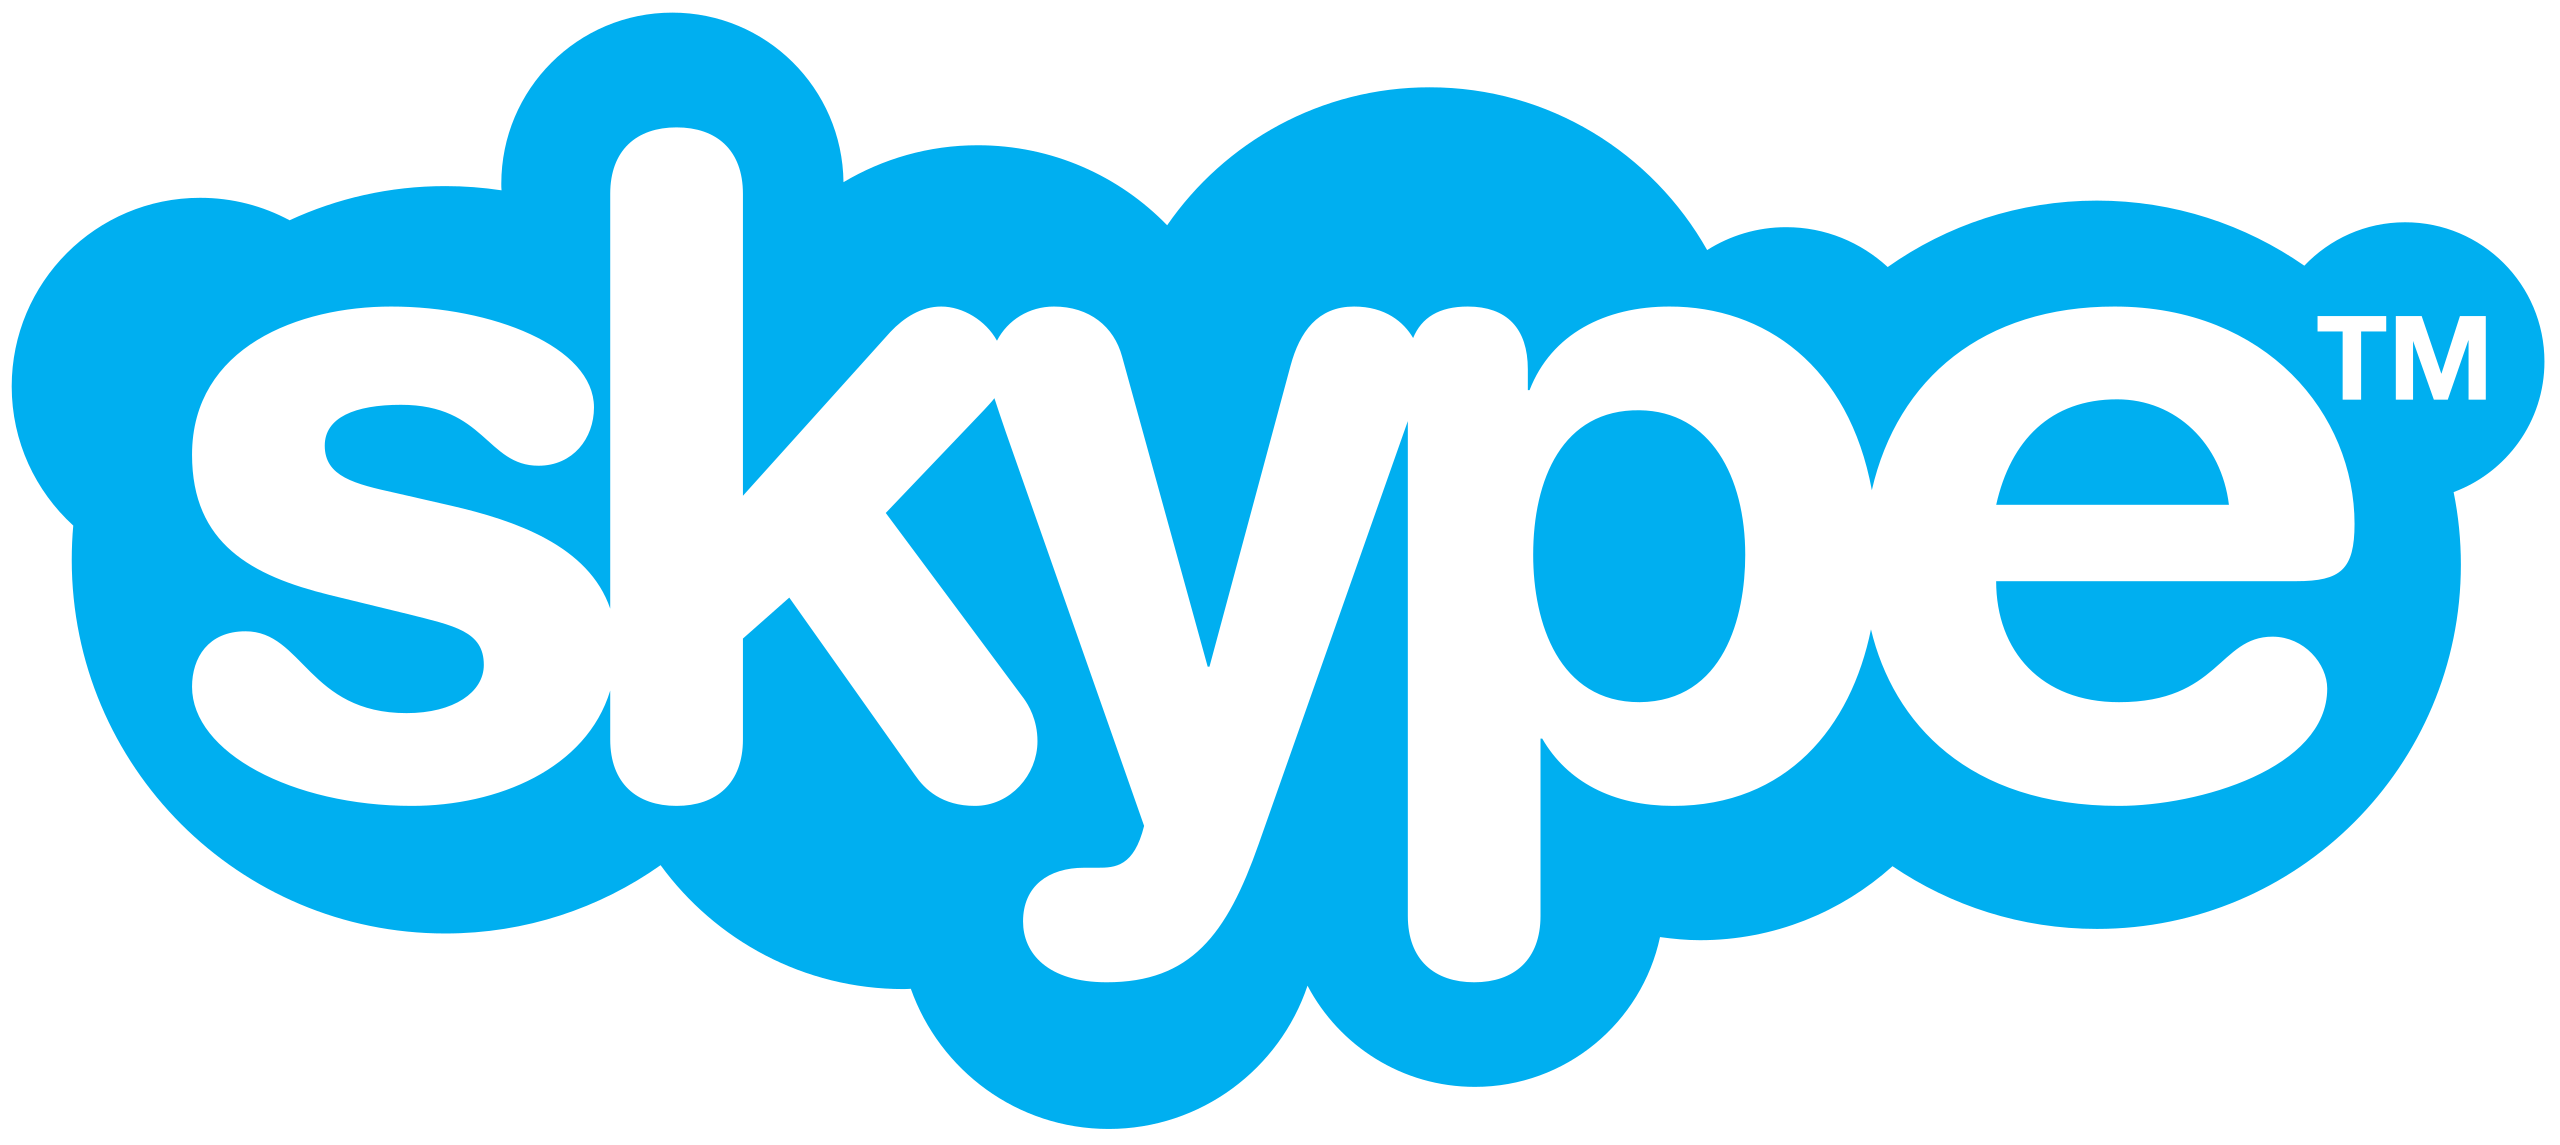 2560px-Skype_logo.svg